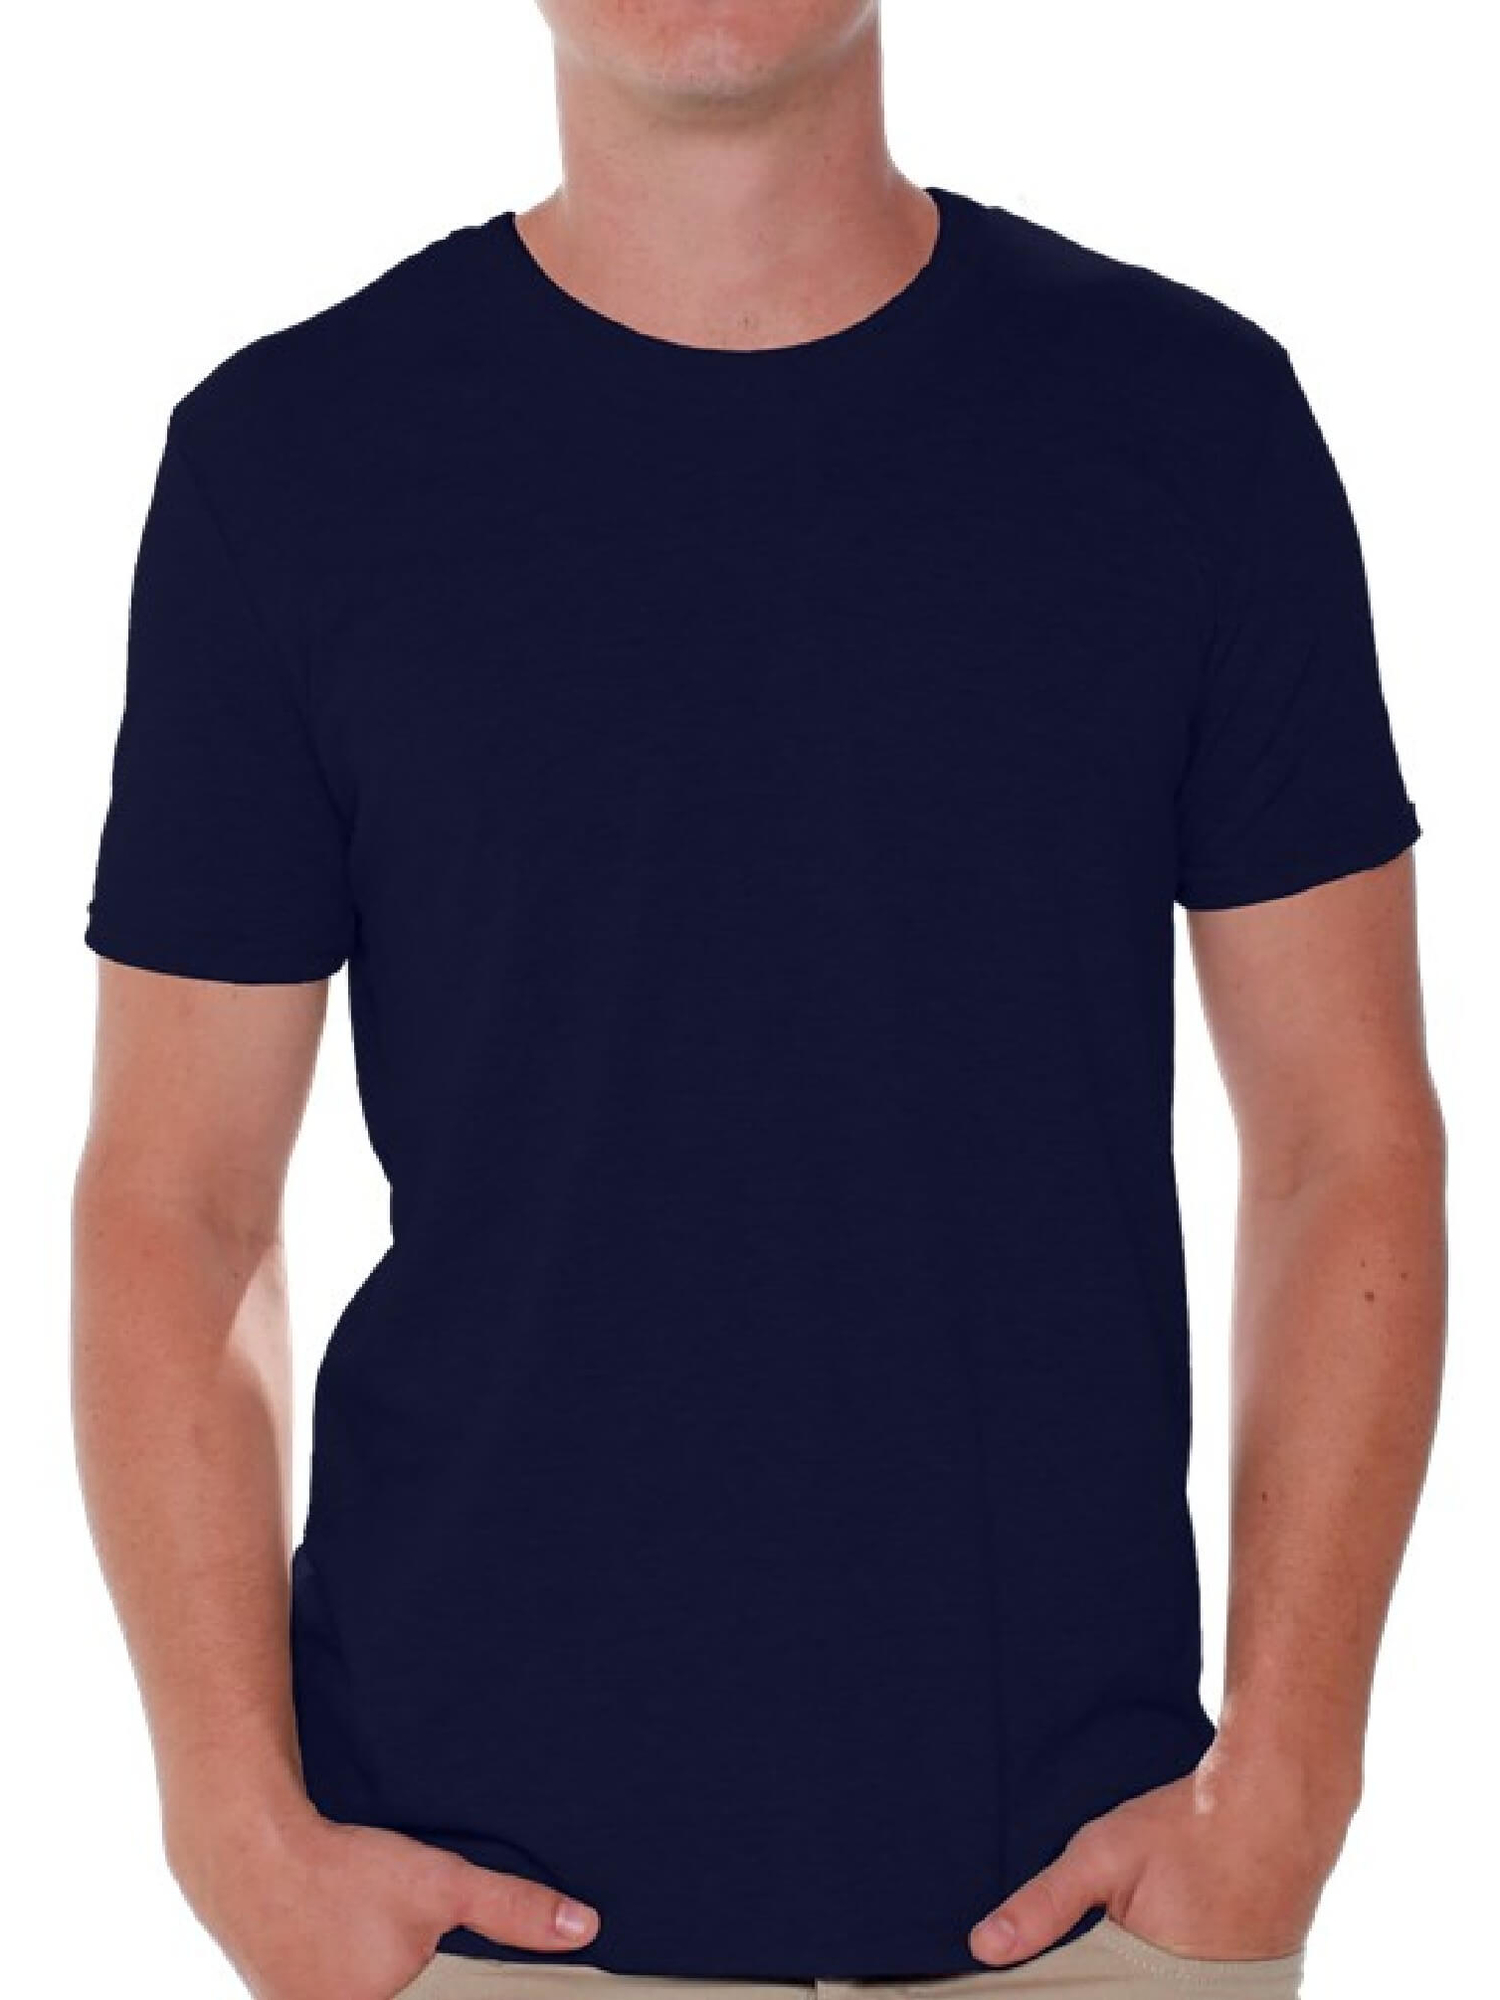 Supasoft Apparel Men Shirt Cotton Men Shirts Mens Value Shirts Best Mens Classic Short Sleeve T-shirt Blank All Color Black Shirts for Men White Shirt Grey Shirt - image 1 of 4